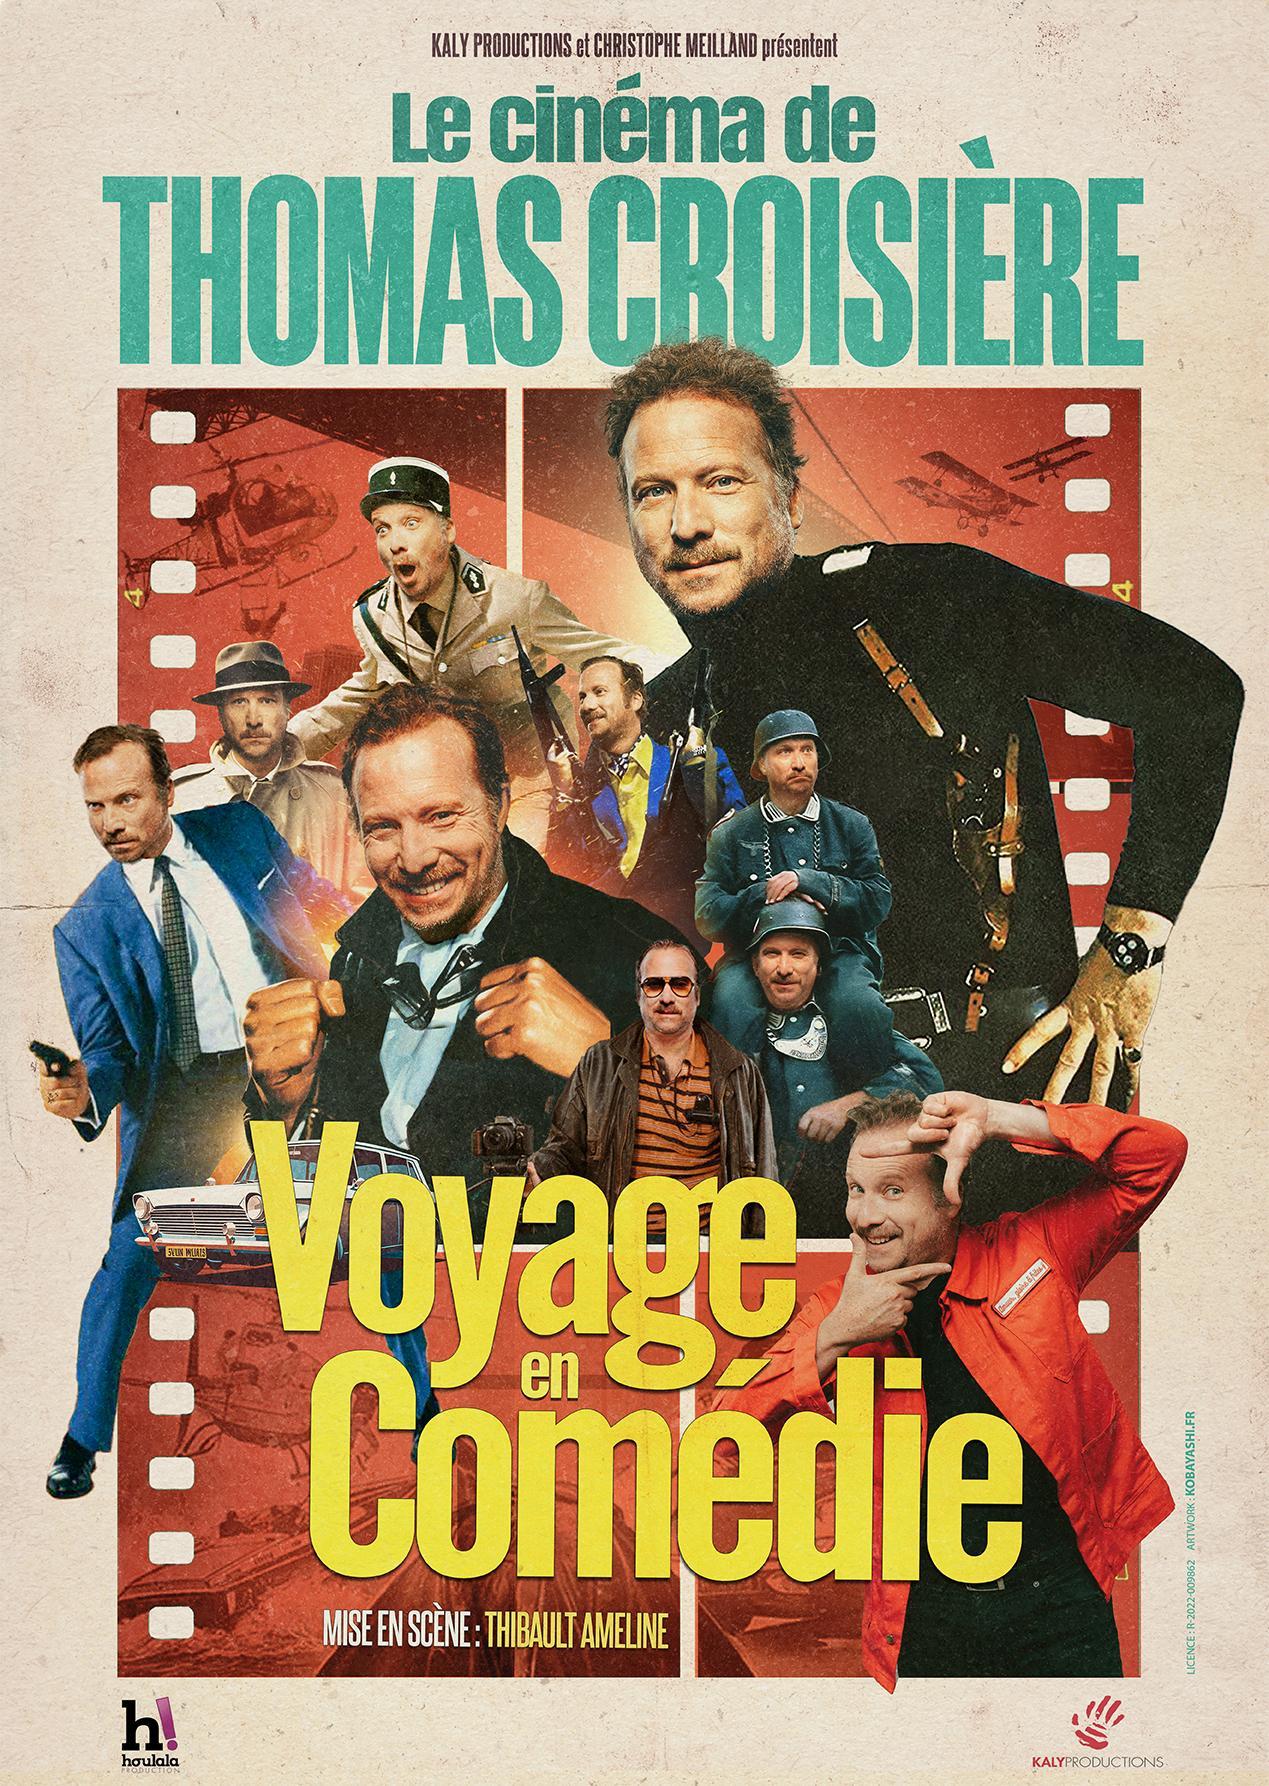 Thomas croisière- ROYAL COMEDY CLUB - REIMS (51)